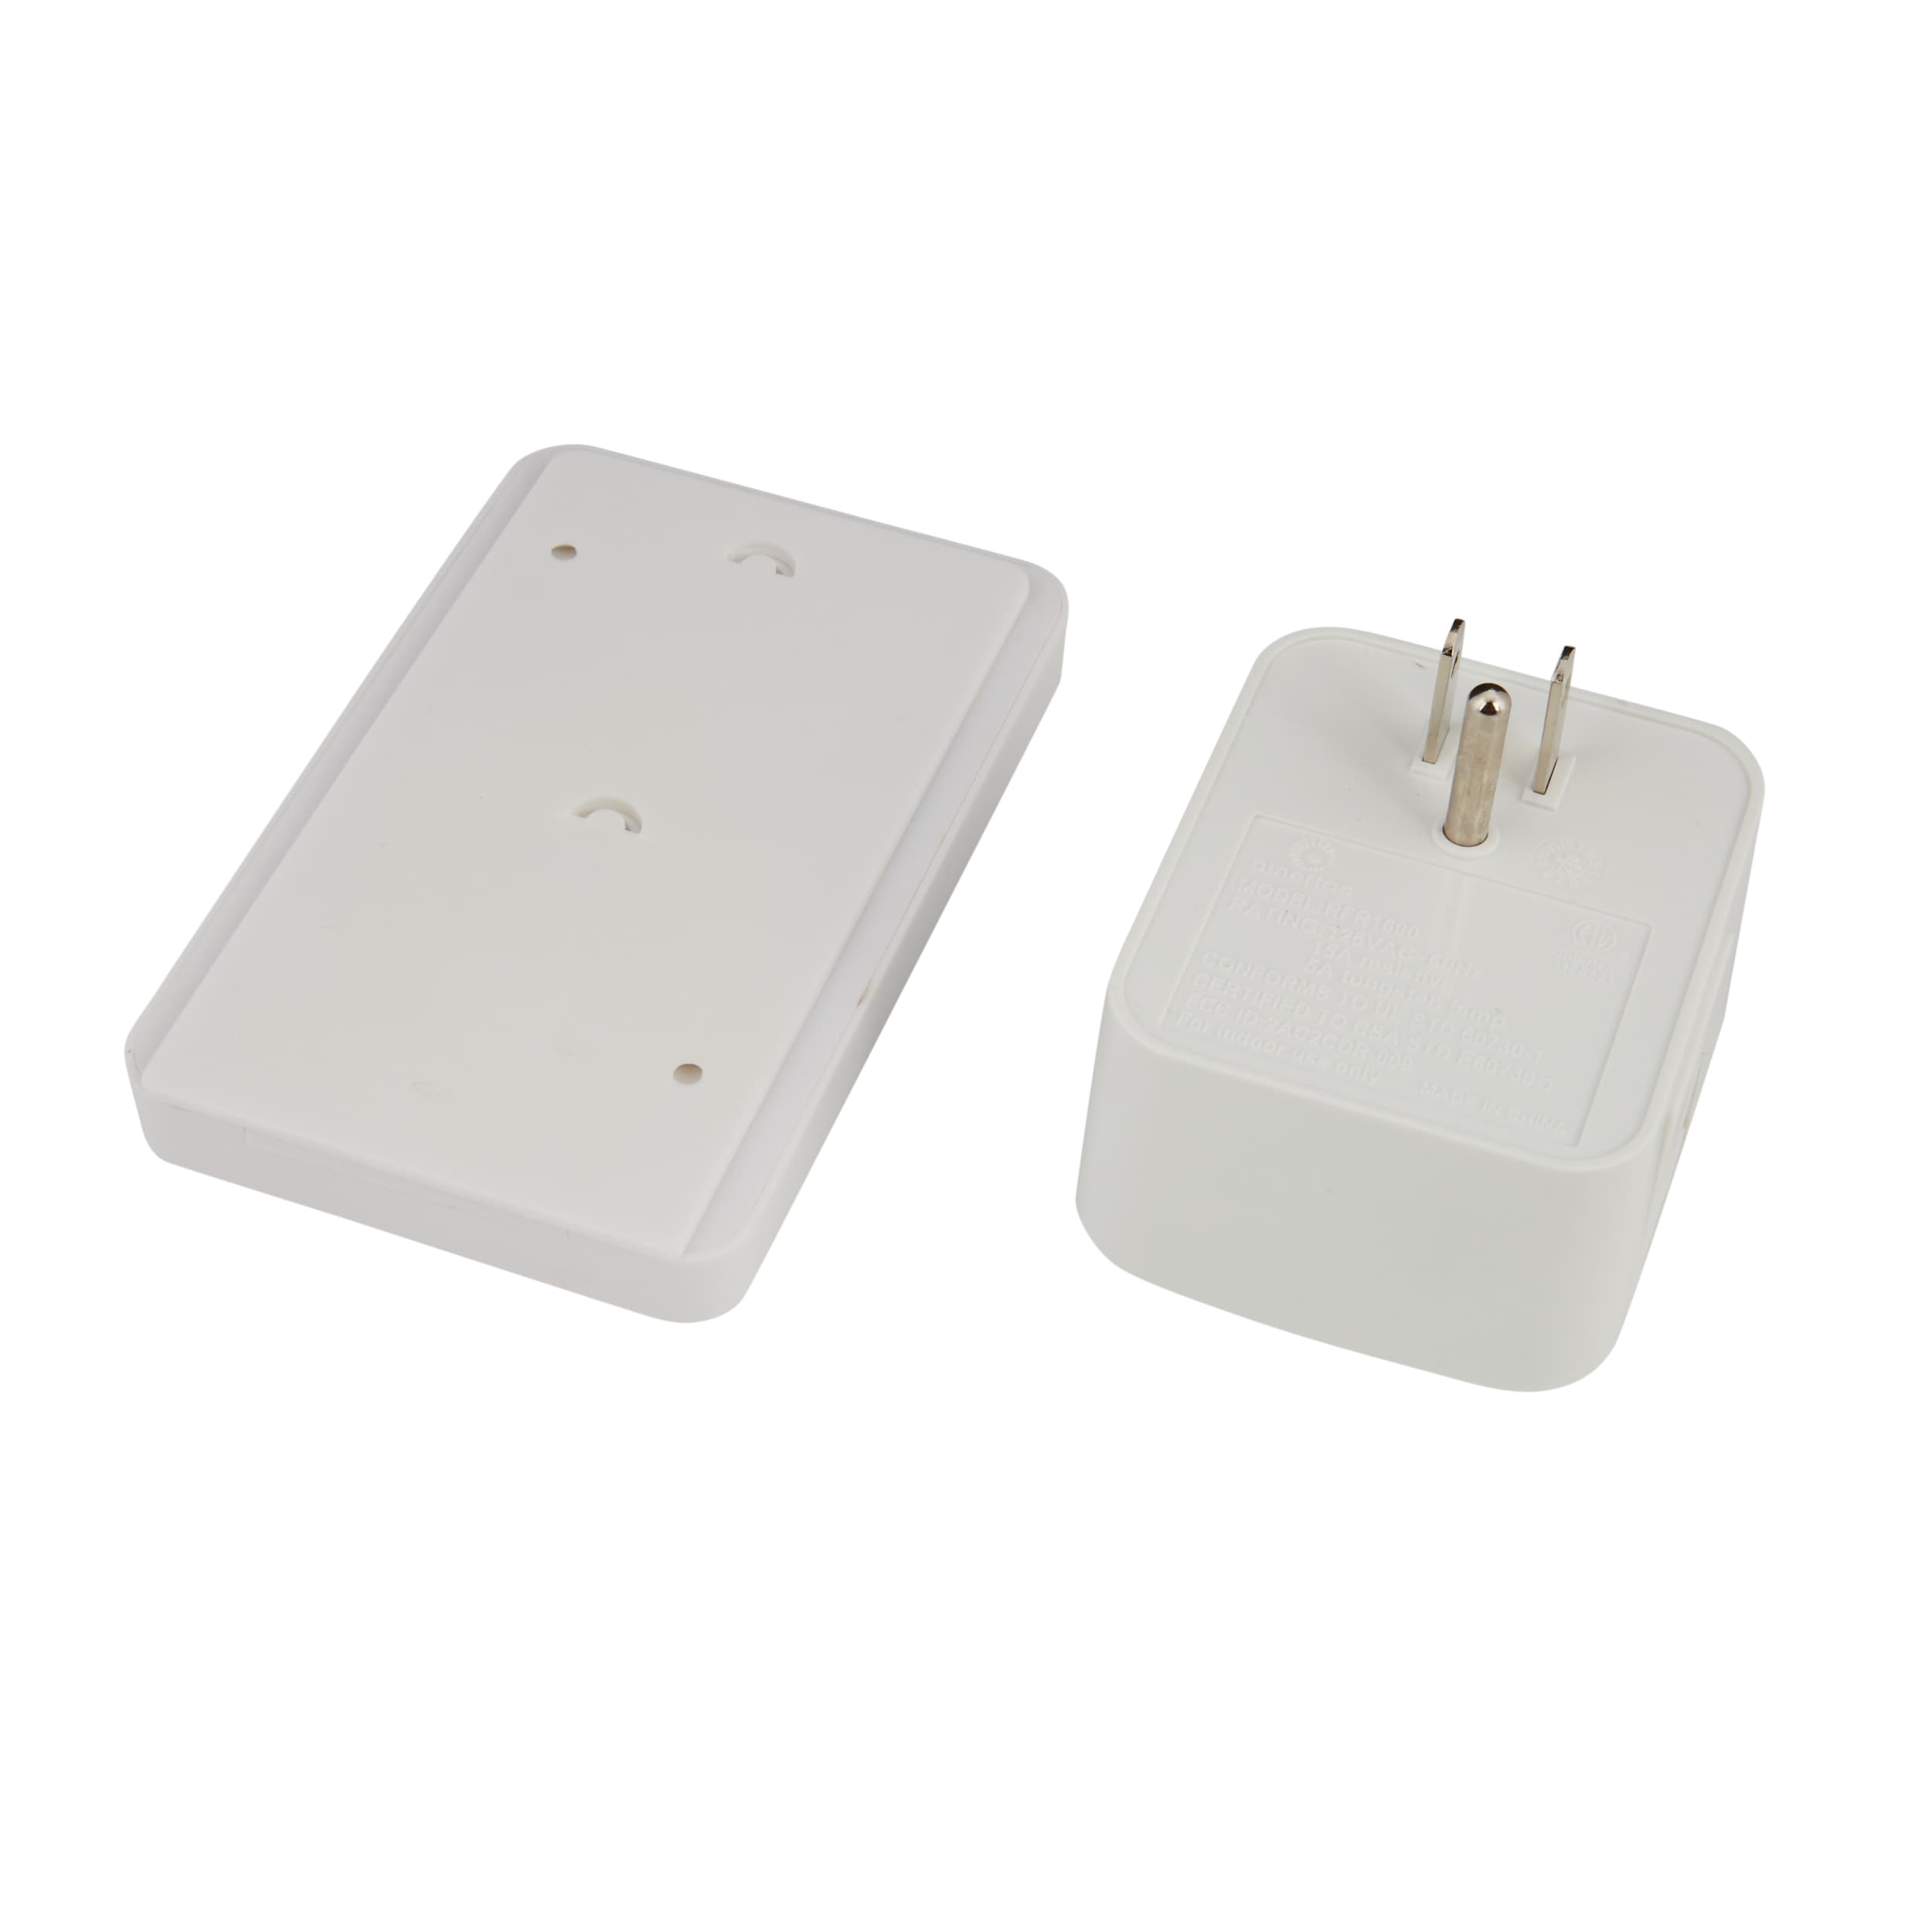 Utilitech Lighting Control Wireless Remote 1 Polarized Outlet - White - Each 54727-T1